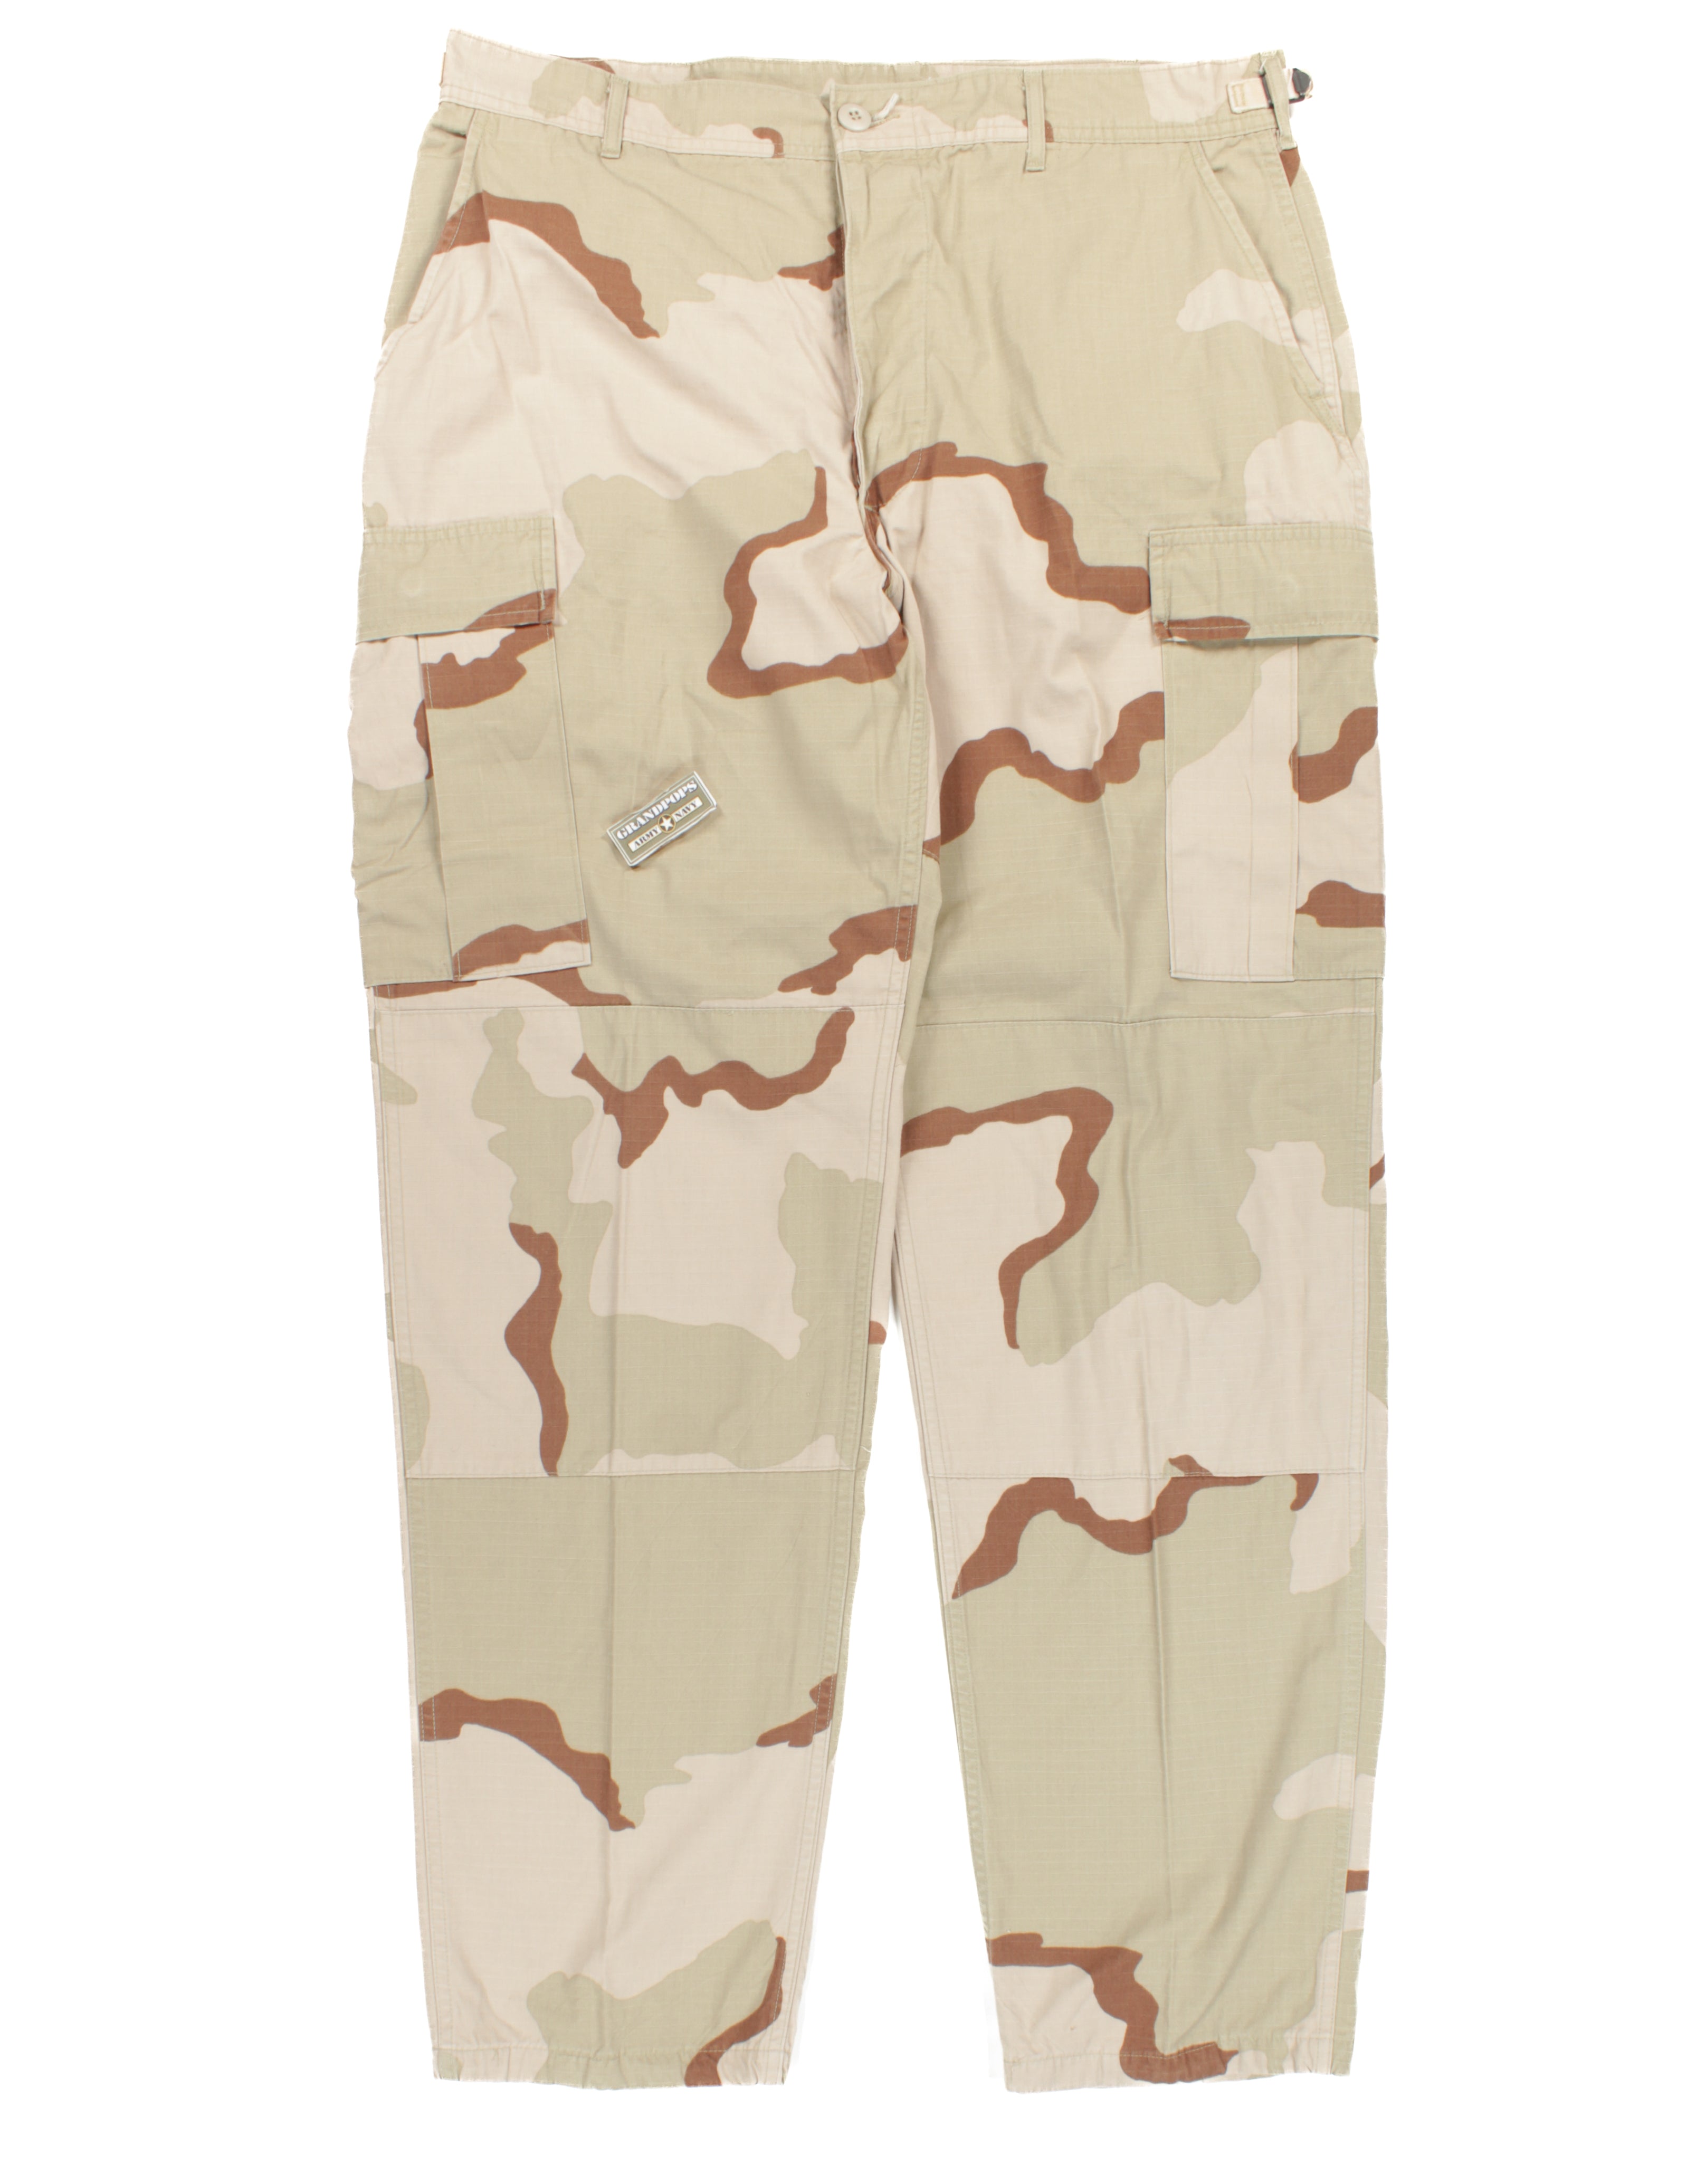 USGI DBDU Pants, 3 Color Desert Camo - Venture Surplus